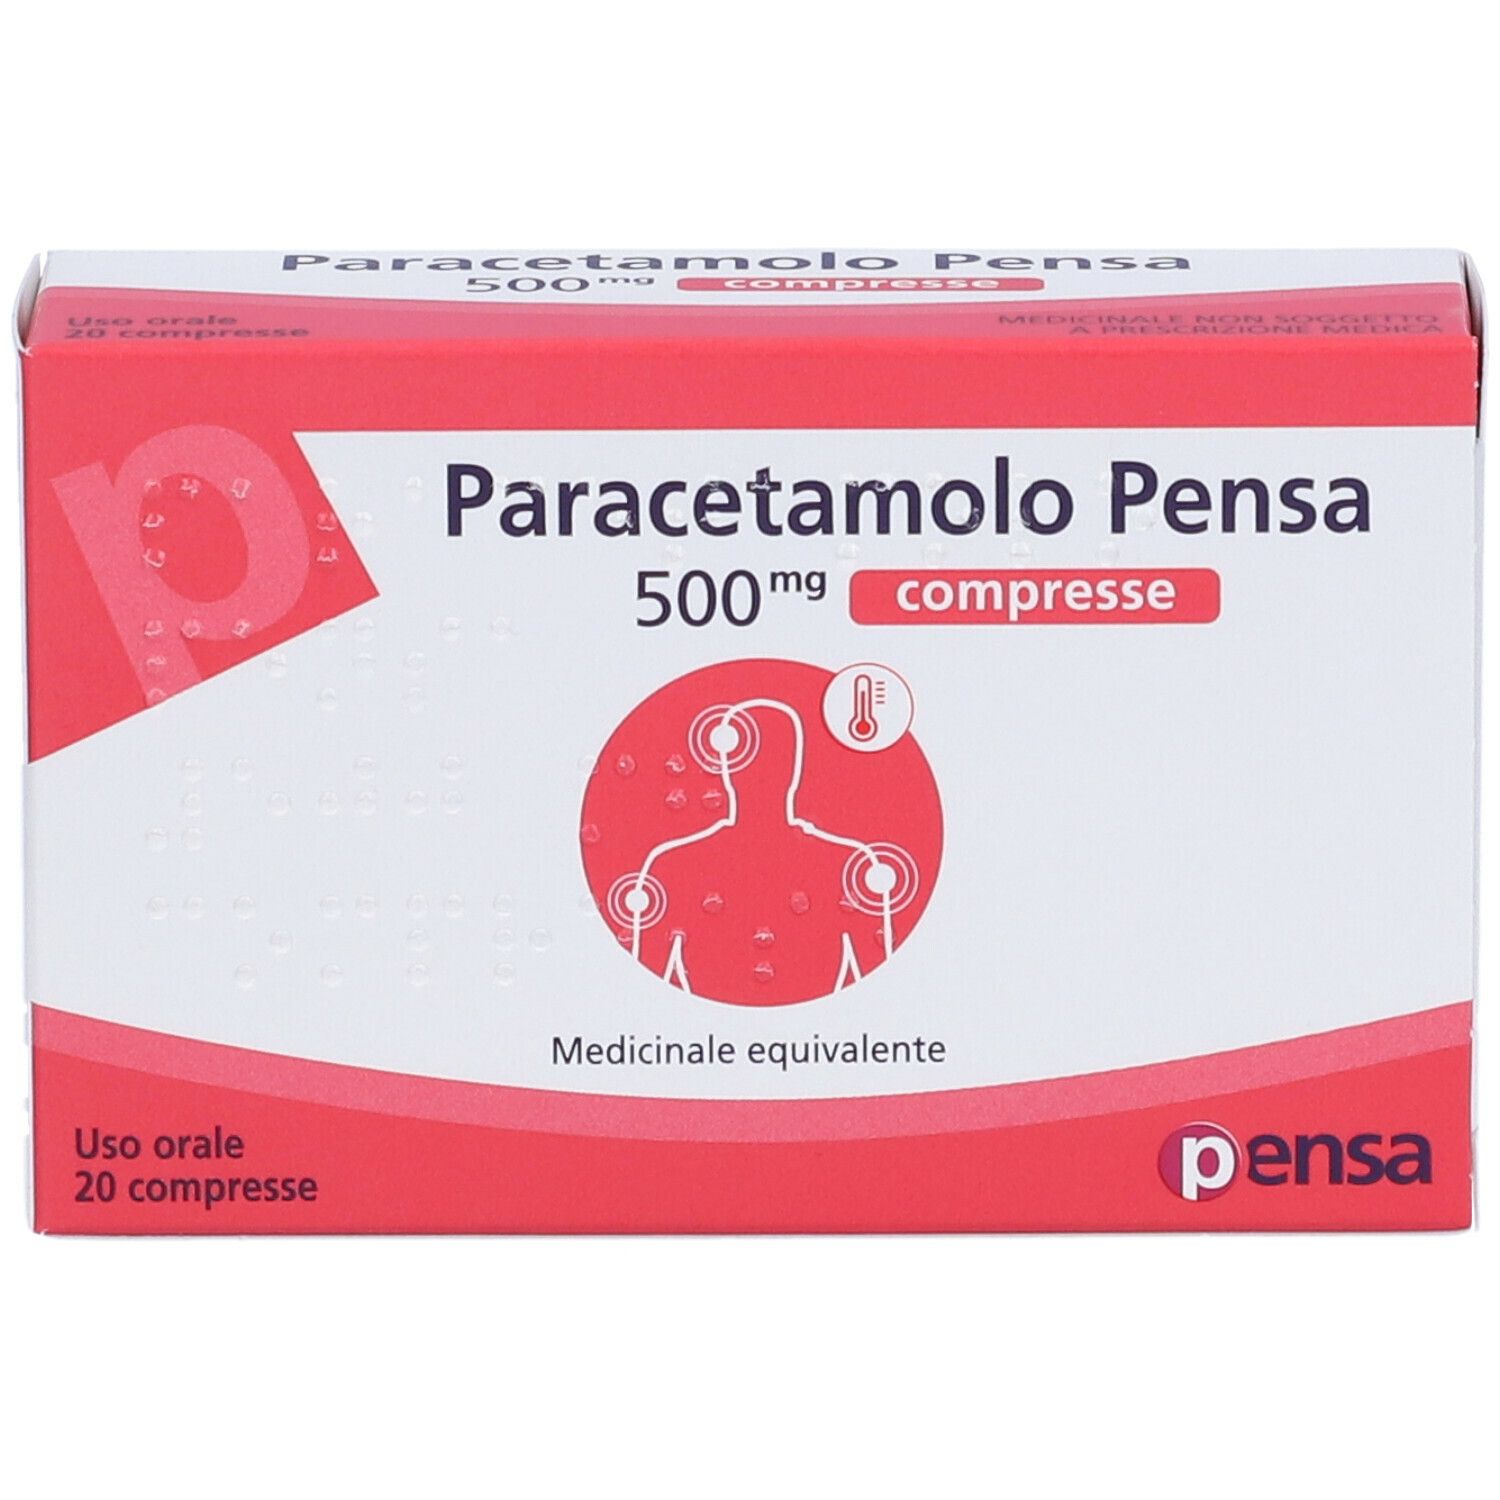 Paracetamolo pensa 20 Compresse 500 mg